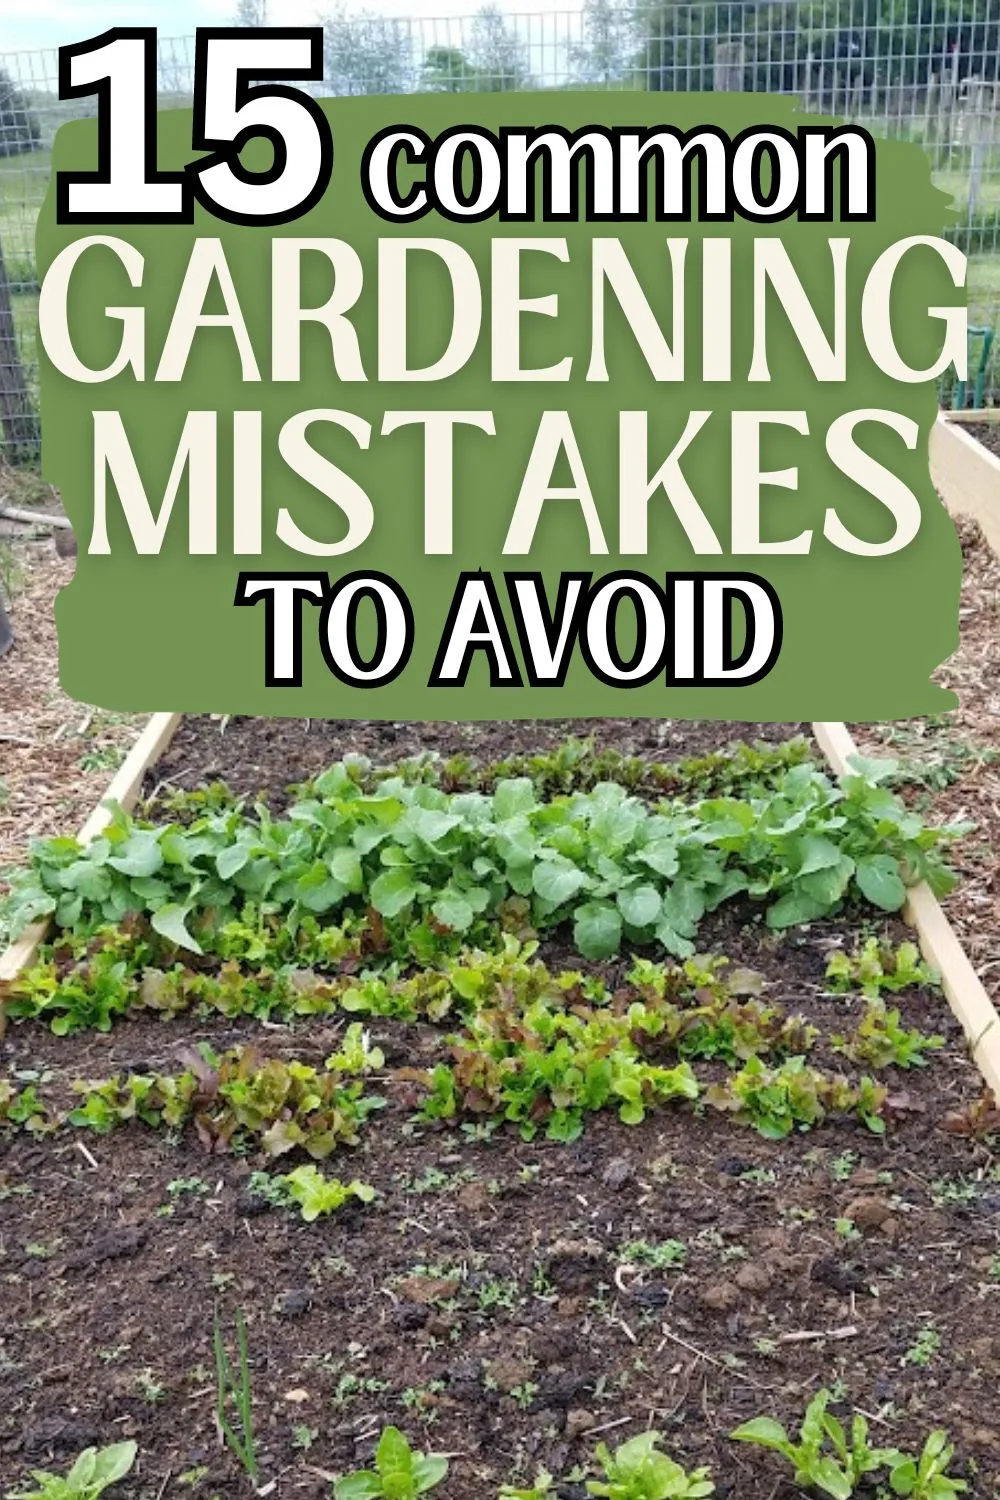 15 common gardening mistakes to avoid.